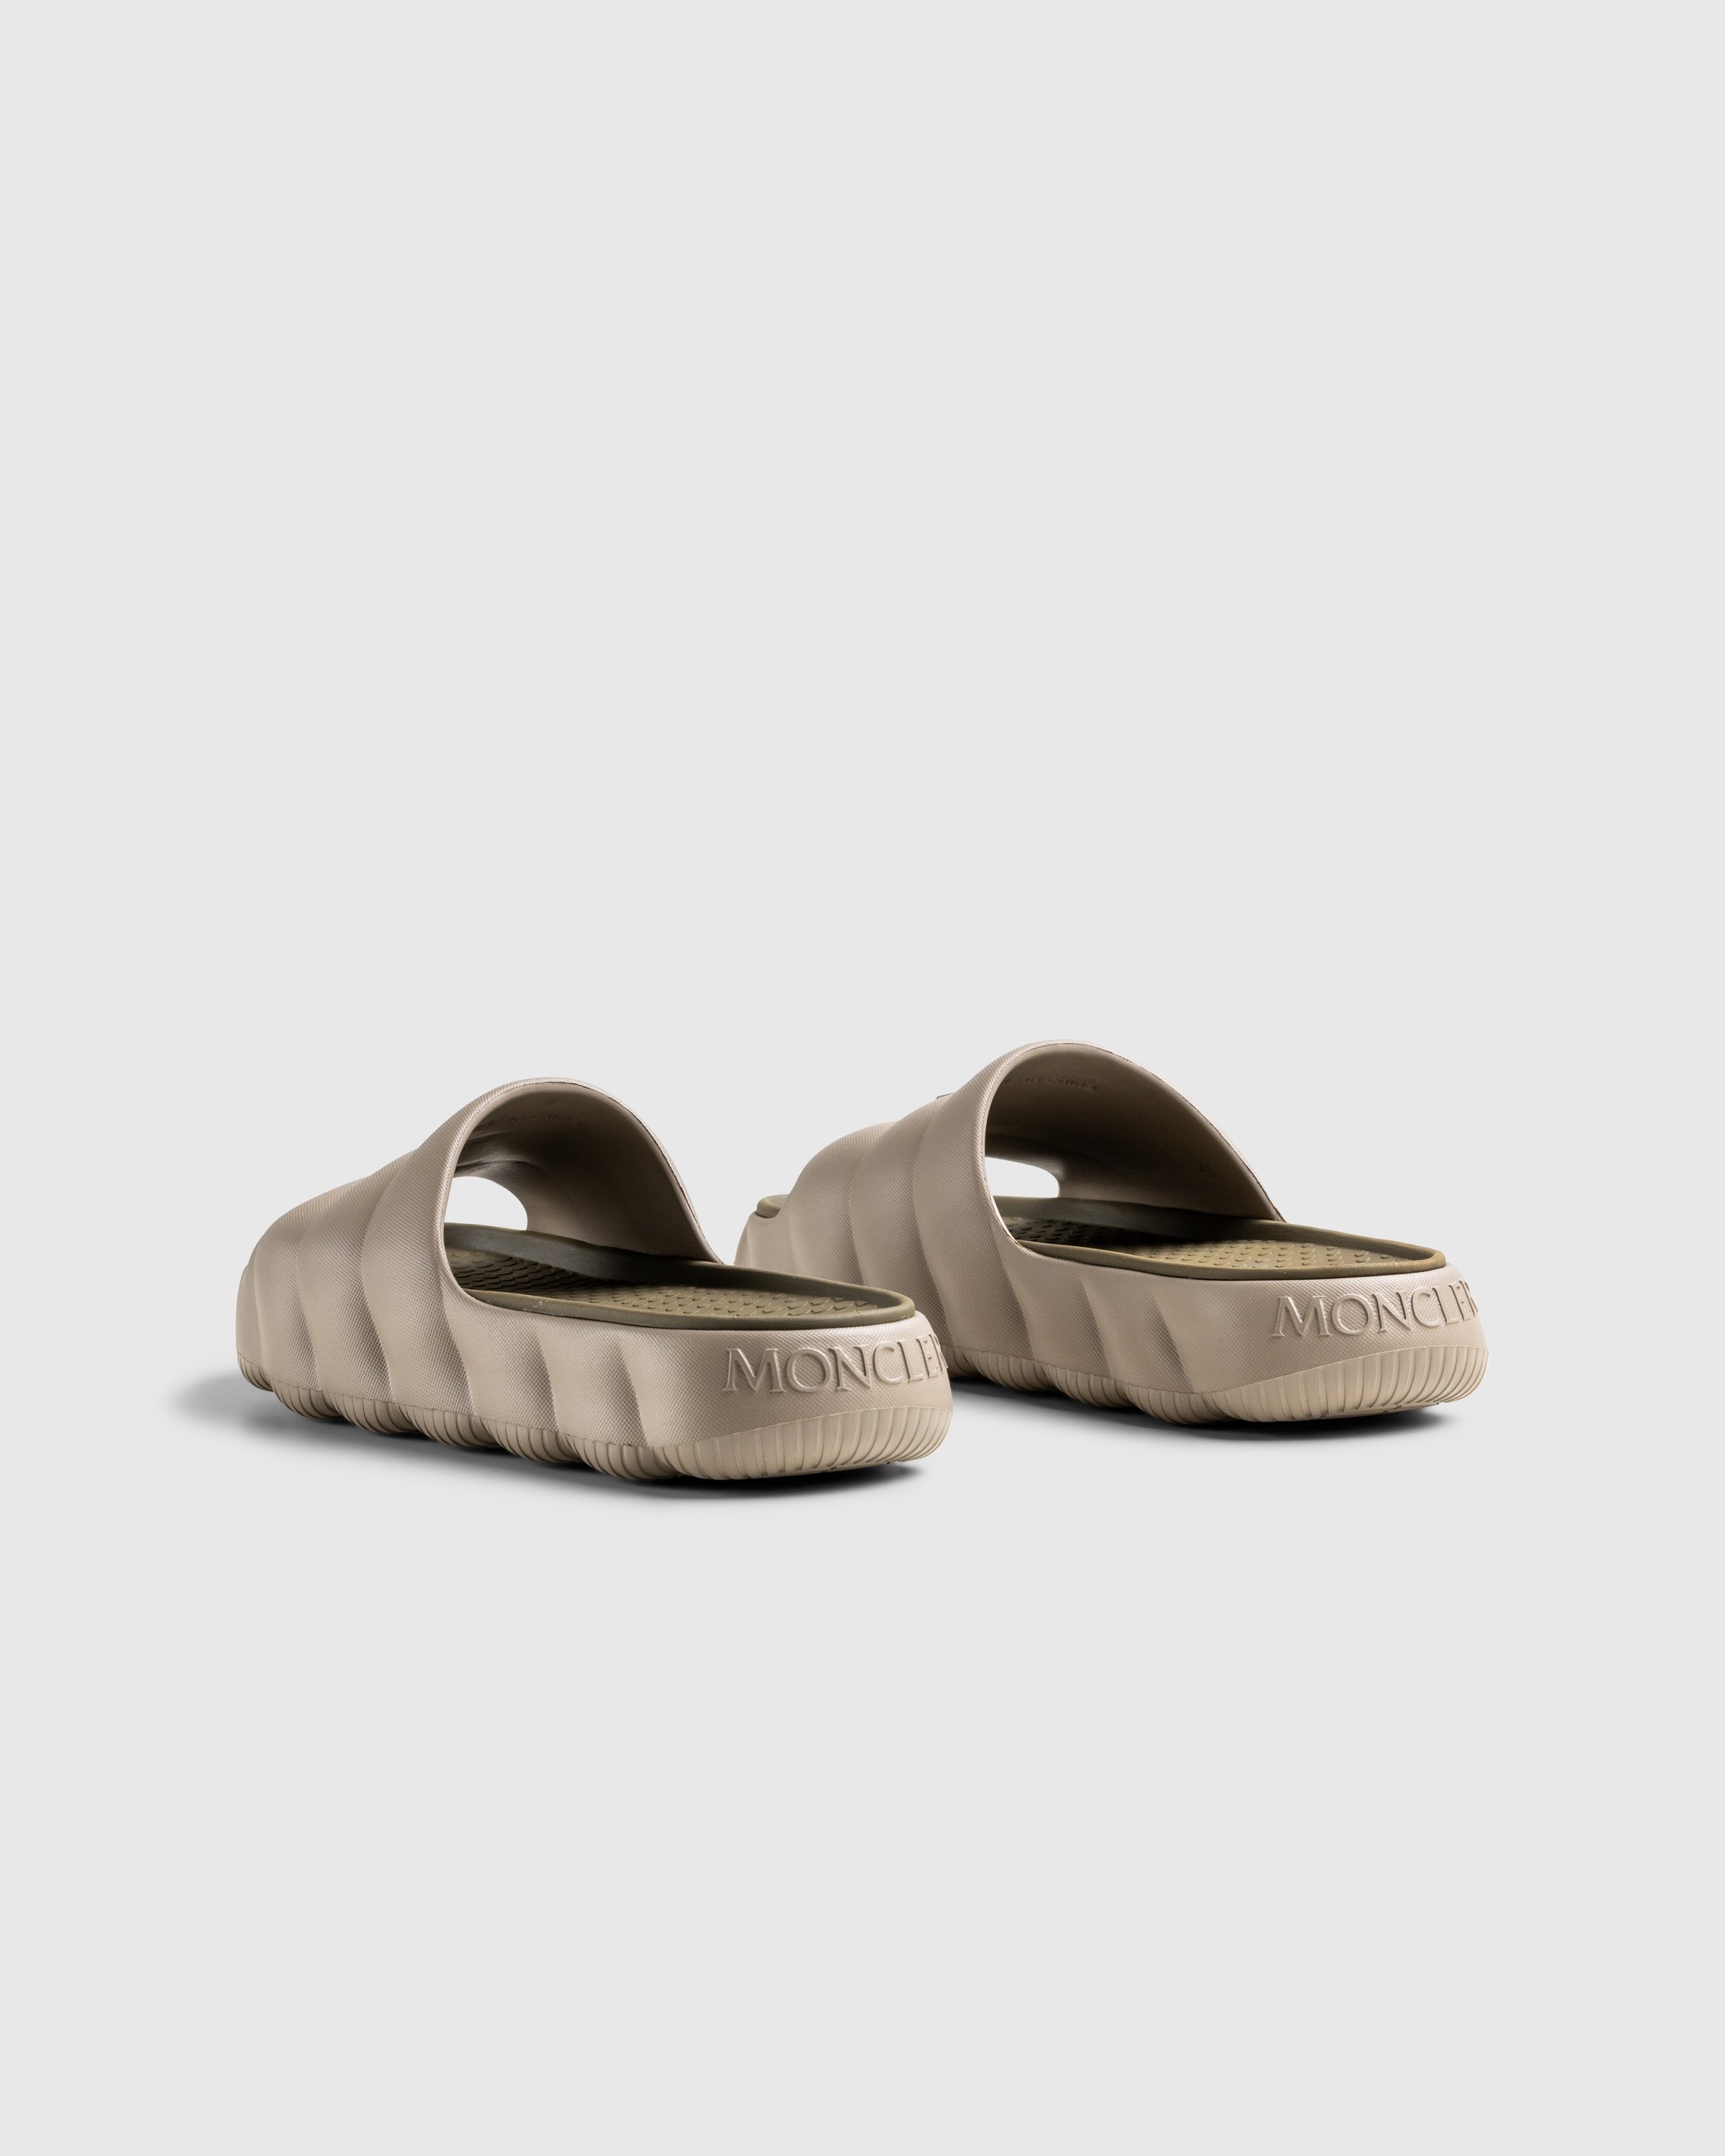 Moncler - LILO SLIDES IVORY - Footwear - White - Image 4